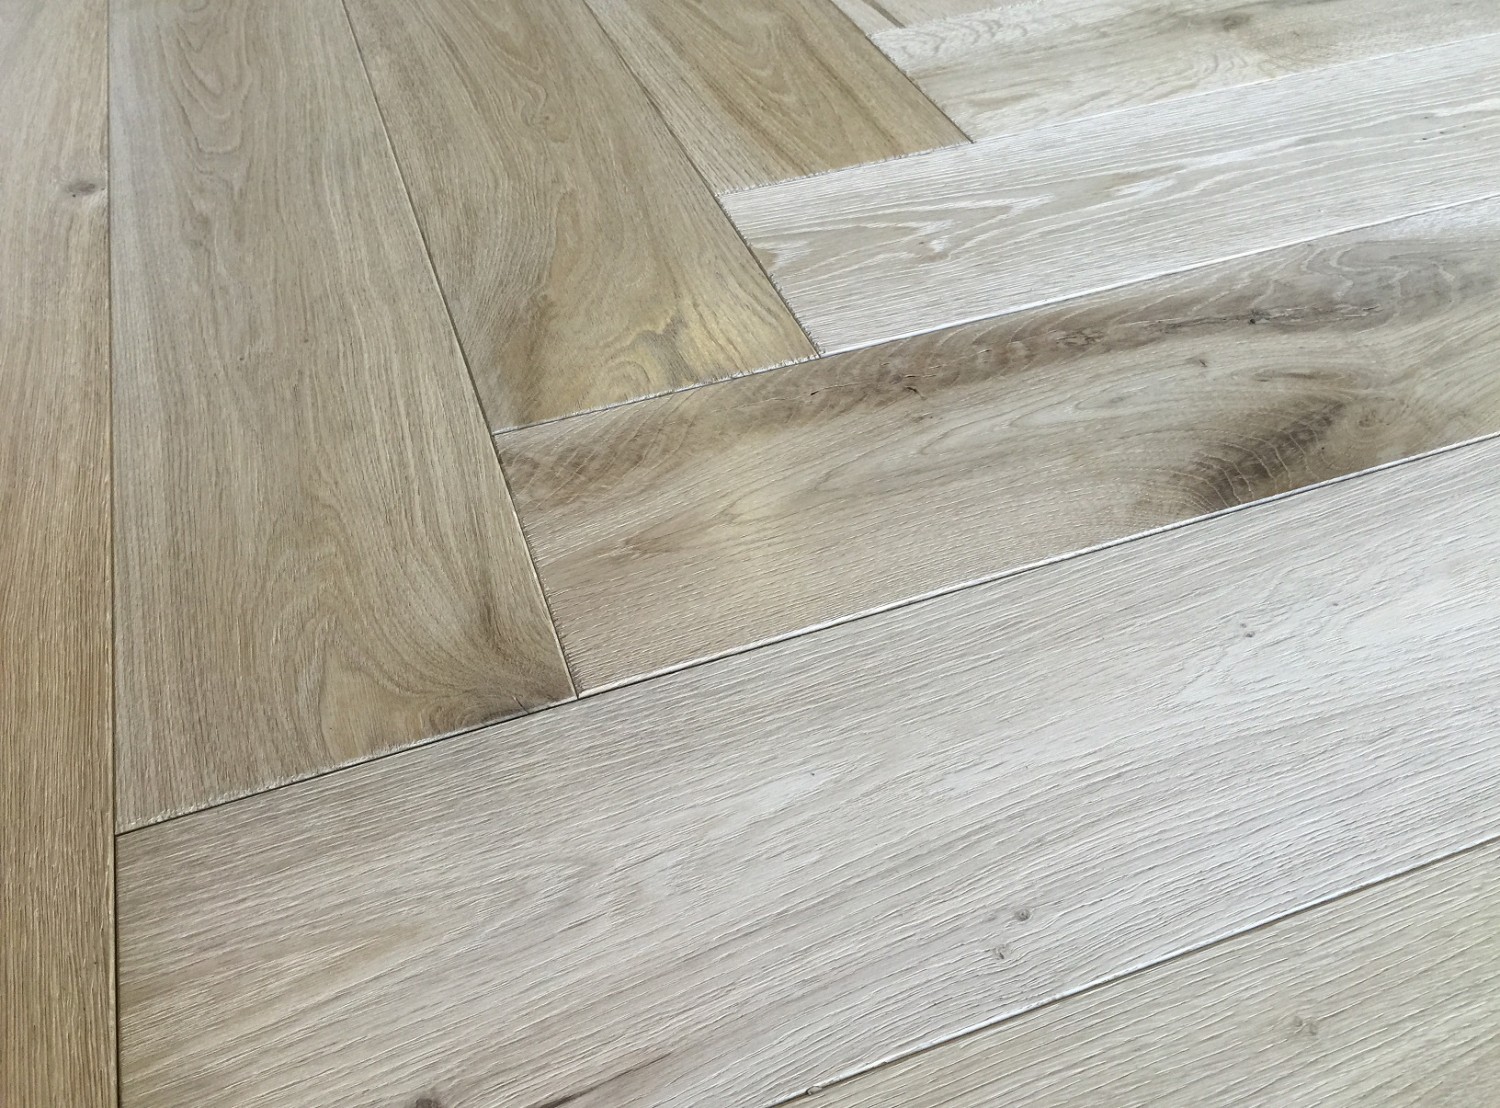 Herringbone Parquet Solid French Oak, French Hardwood Floors